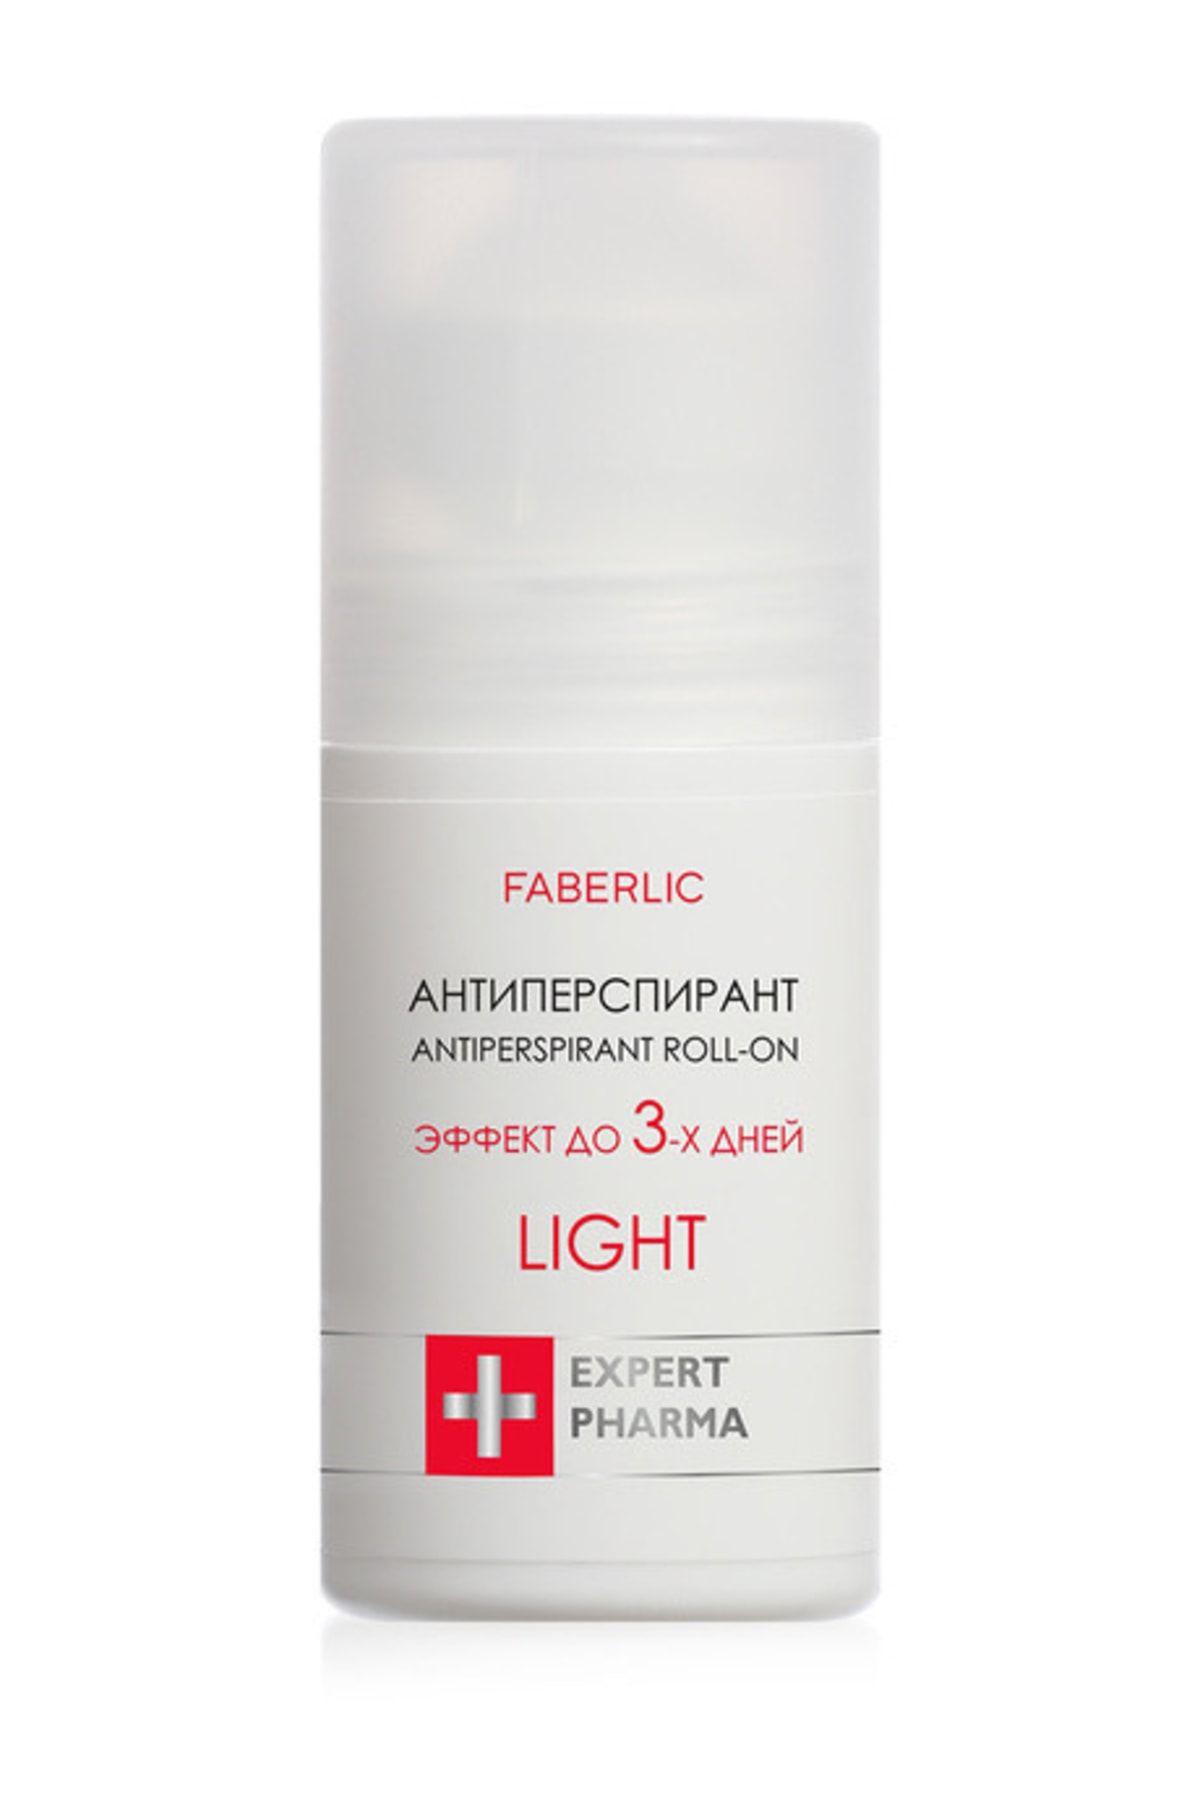 Faberlic Light Antiperspirant Roll-on Deodorant